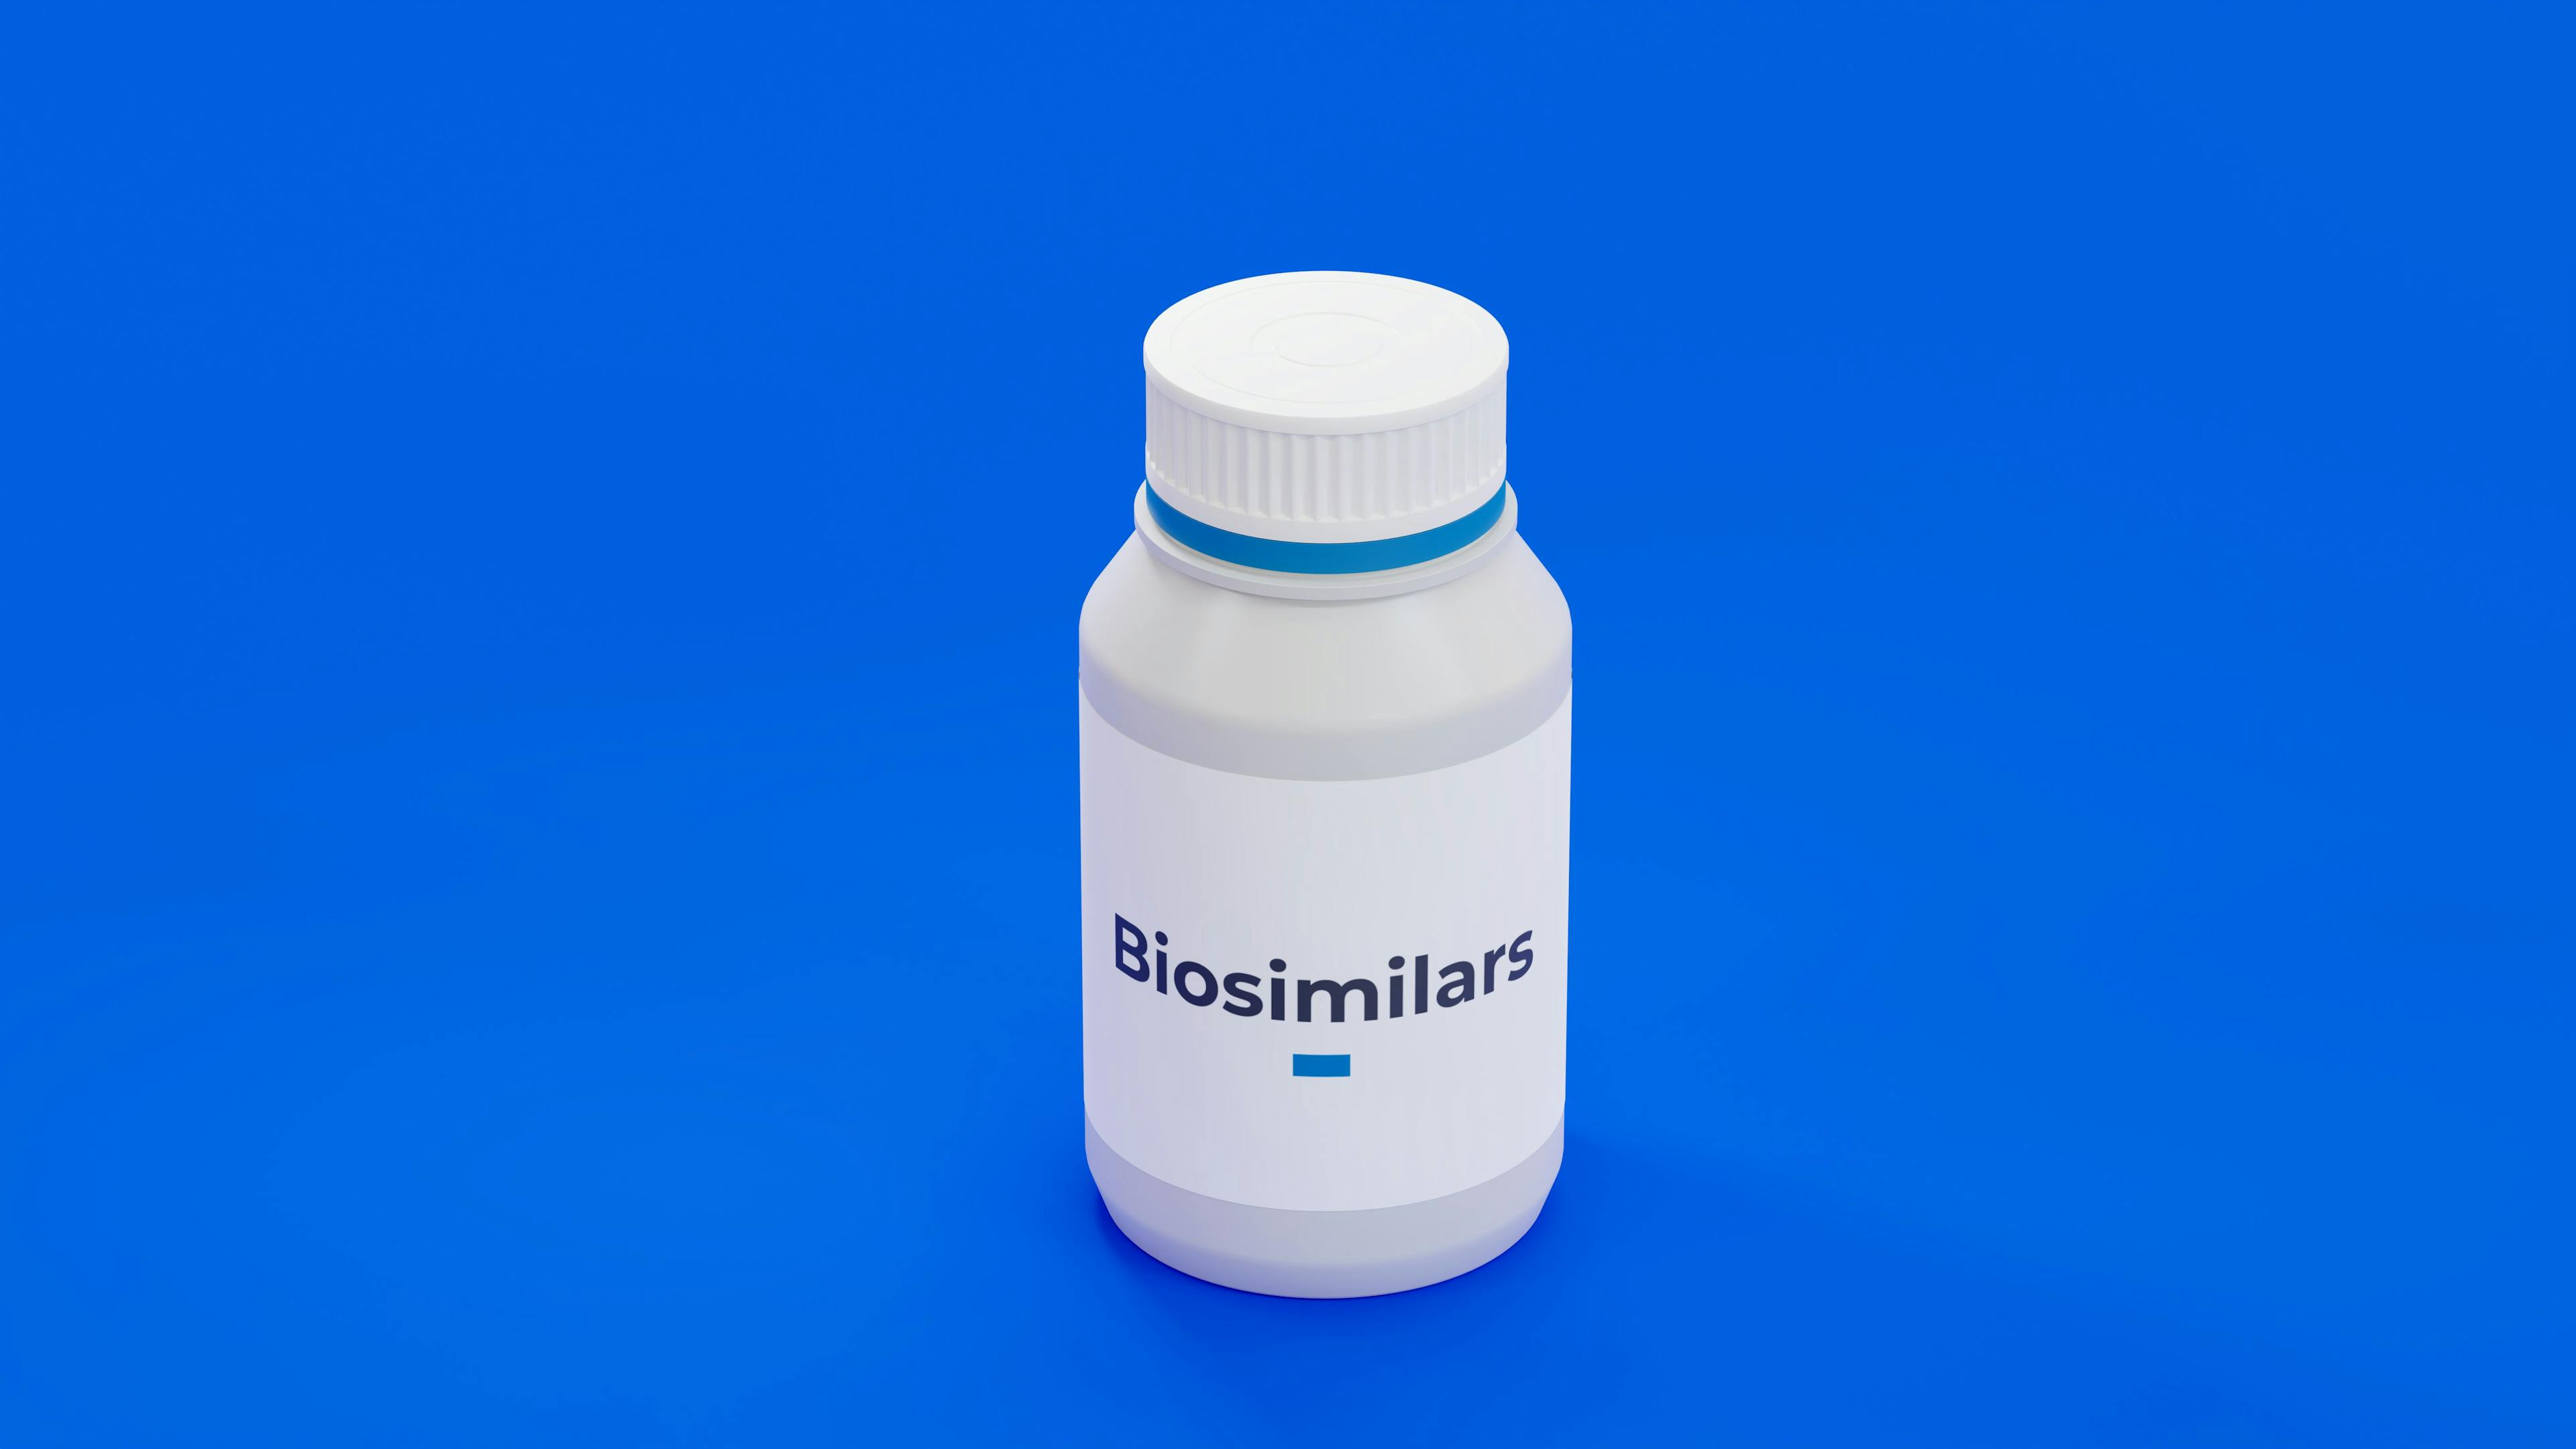 Biosimilar pharmaceutical drug bottle on blue background. | Image Credit: Carl - stock.adobe.com